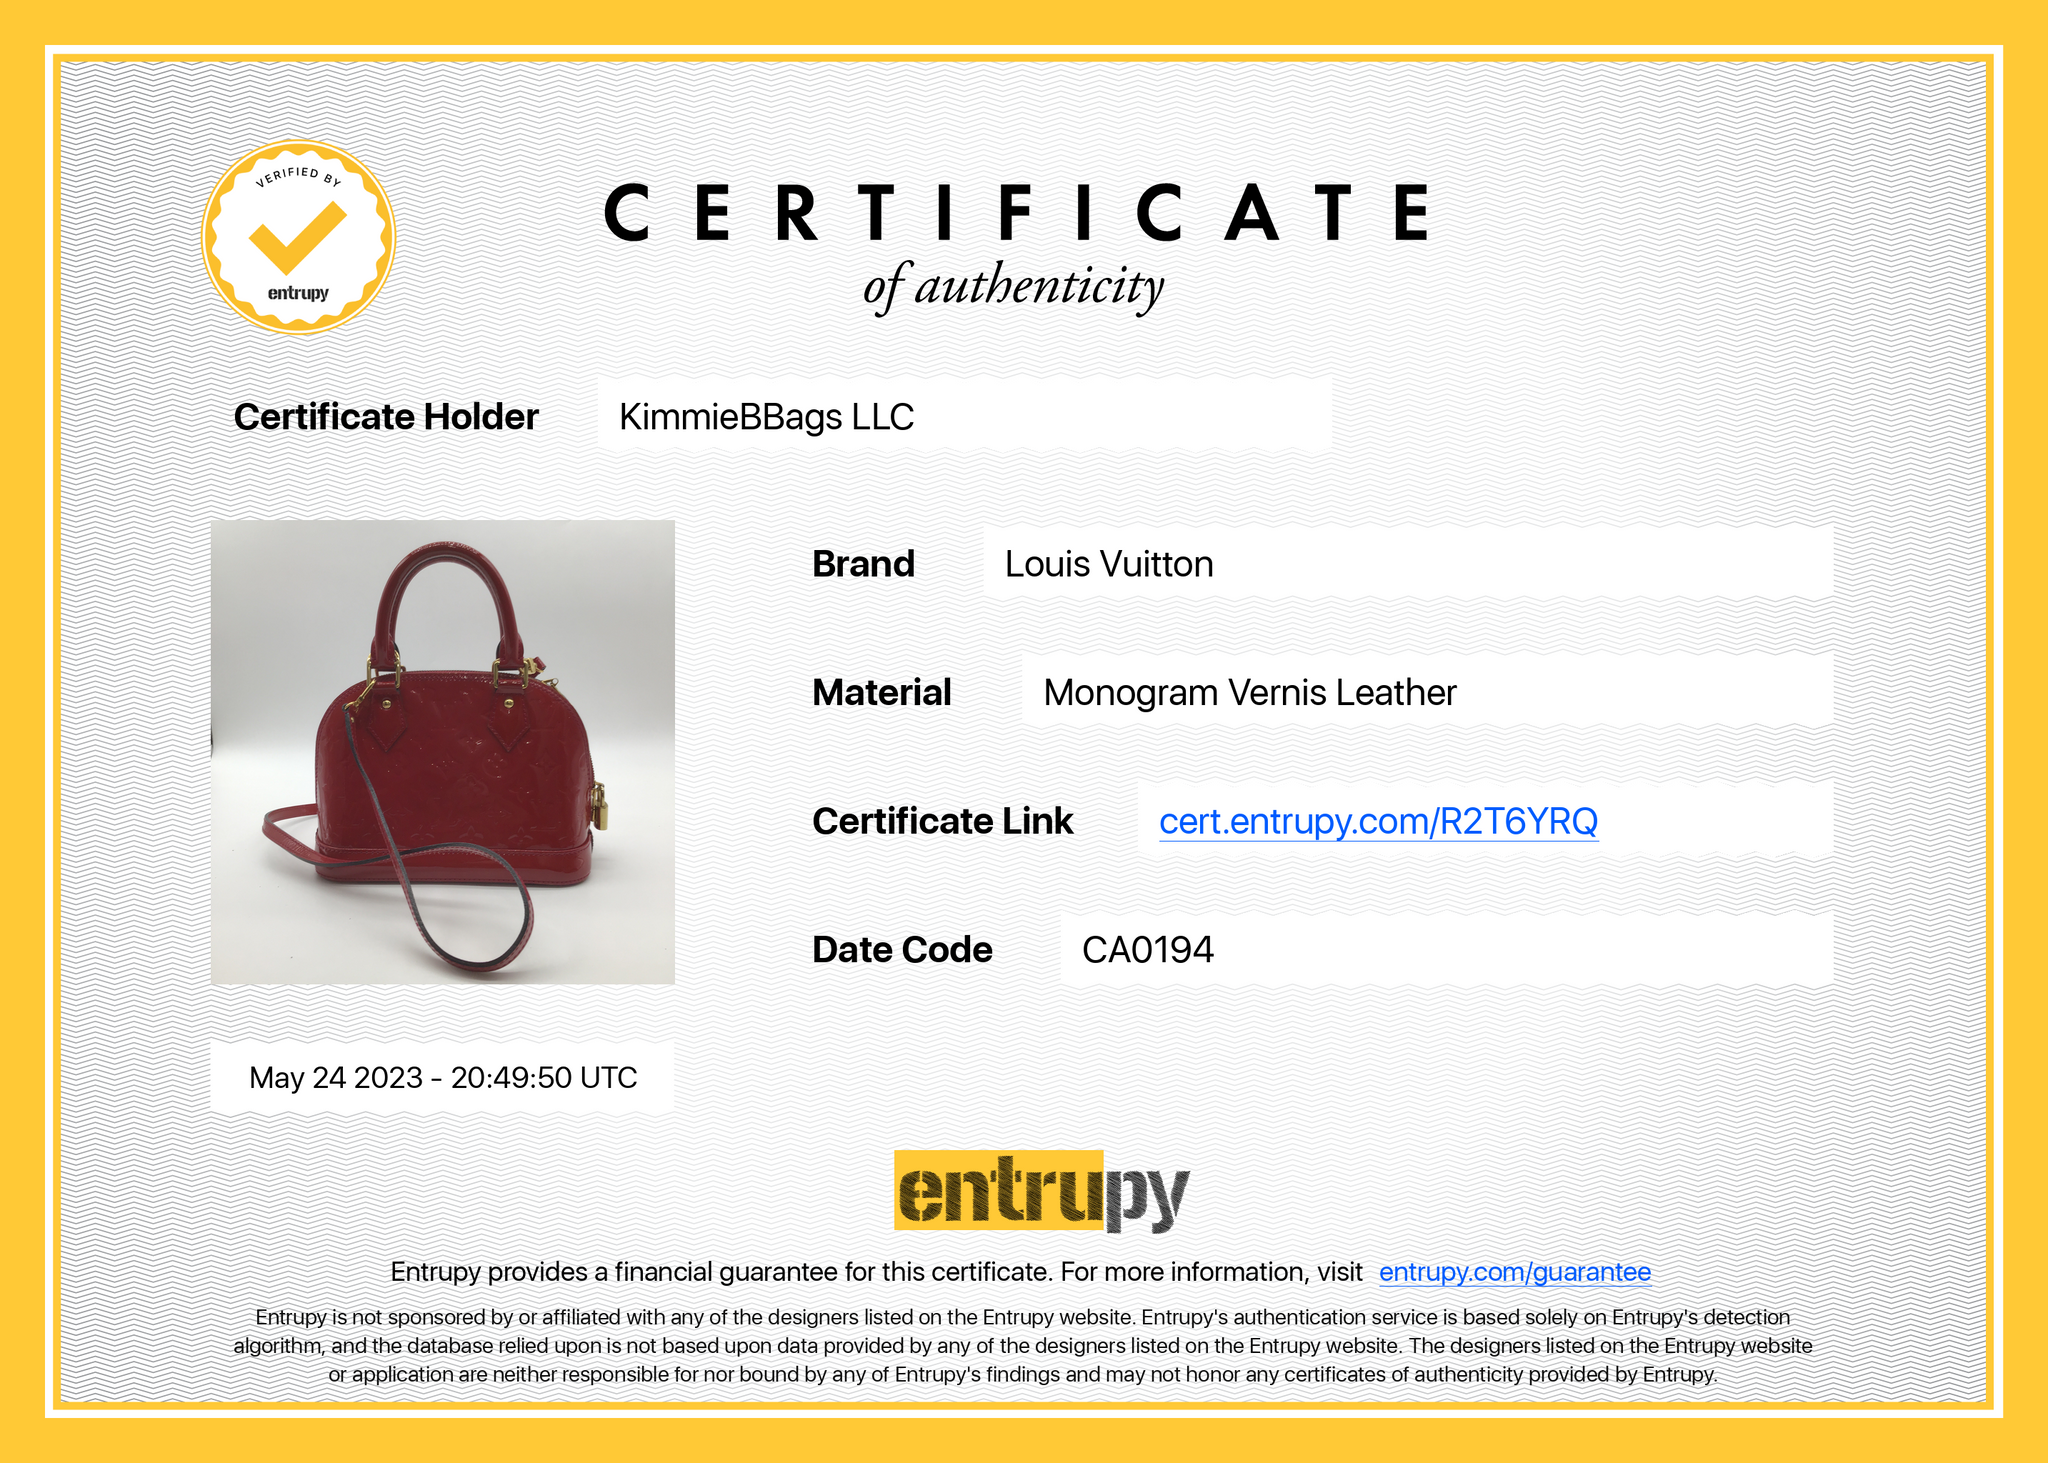 PRELOVED Louis Vuitton Alma BB Red Vernis Crossbody Bag MI0155